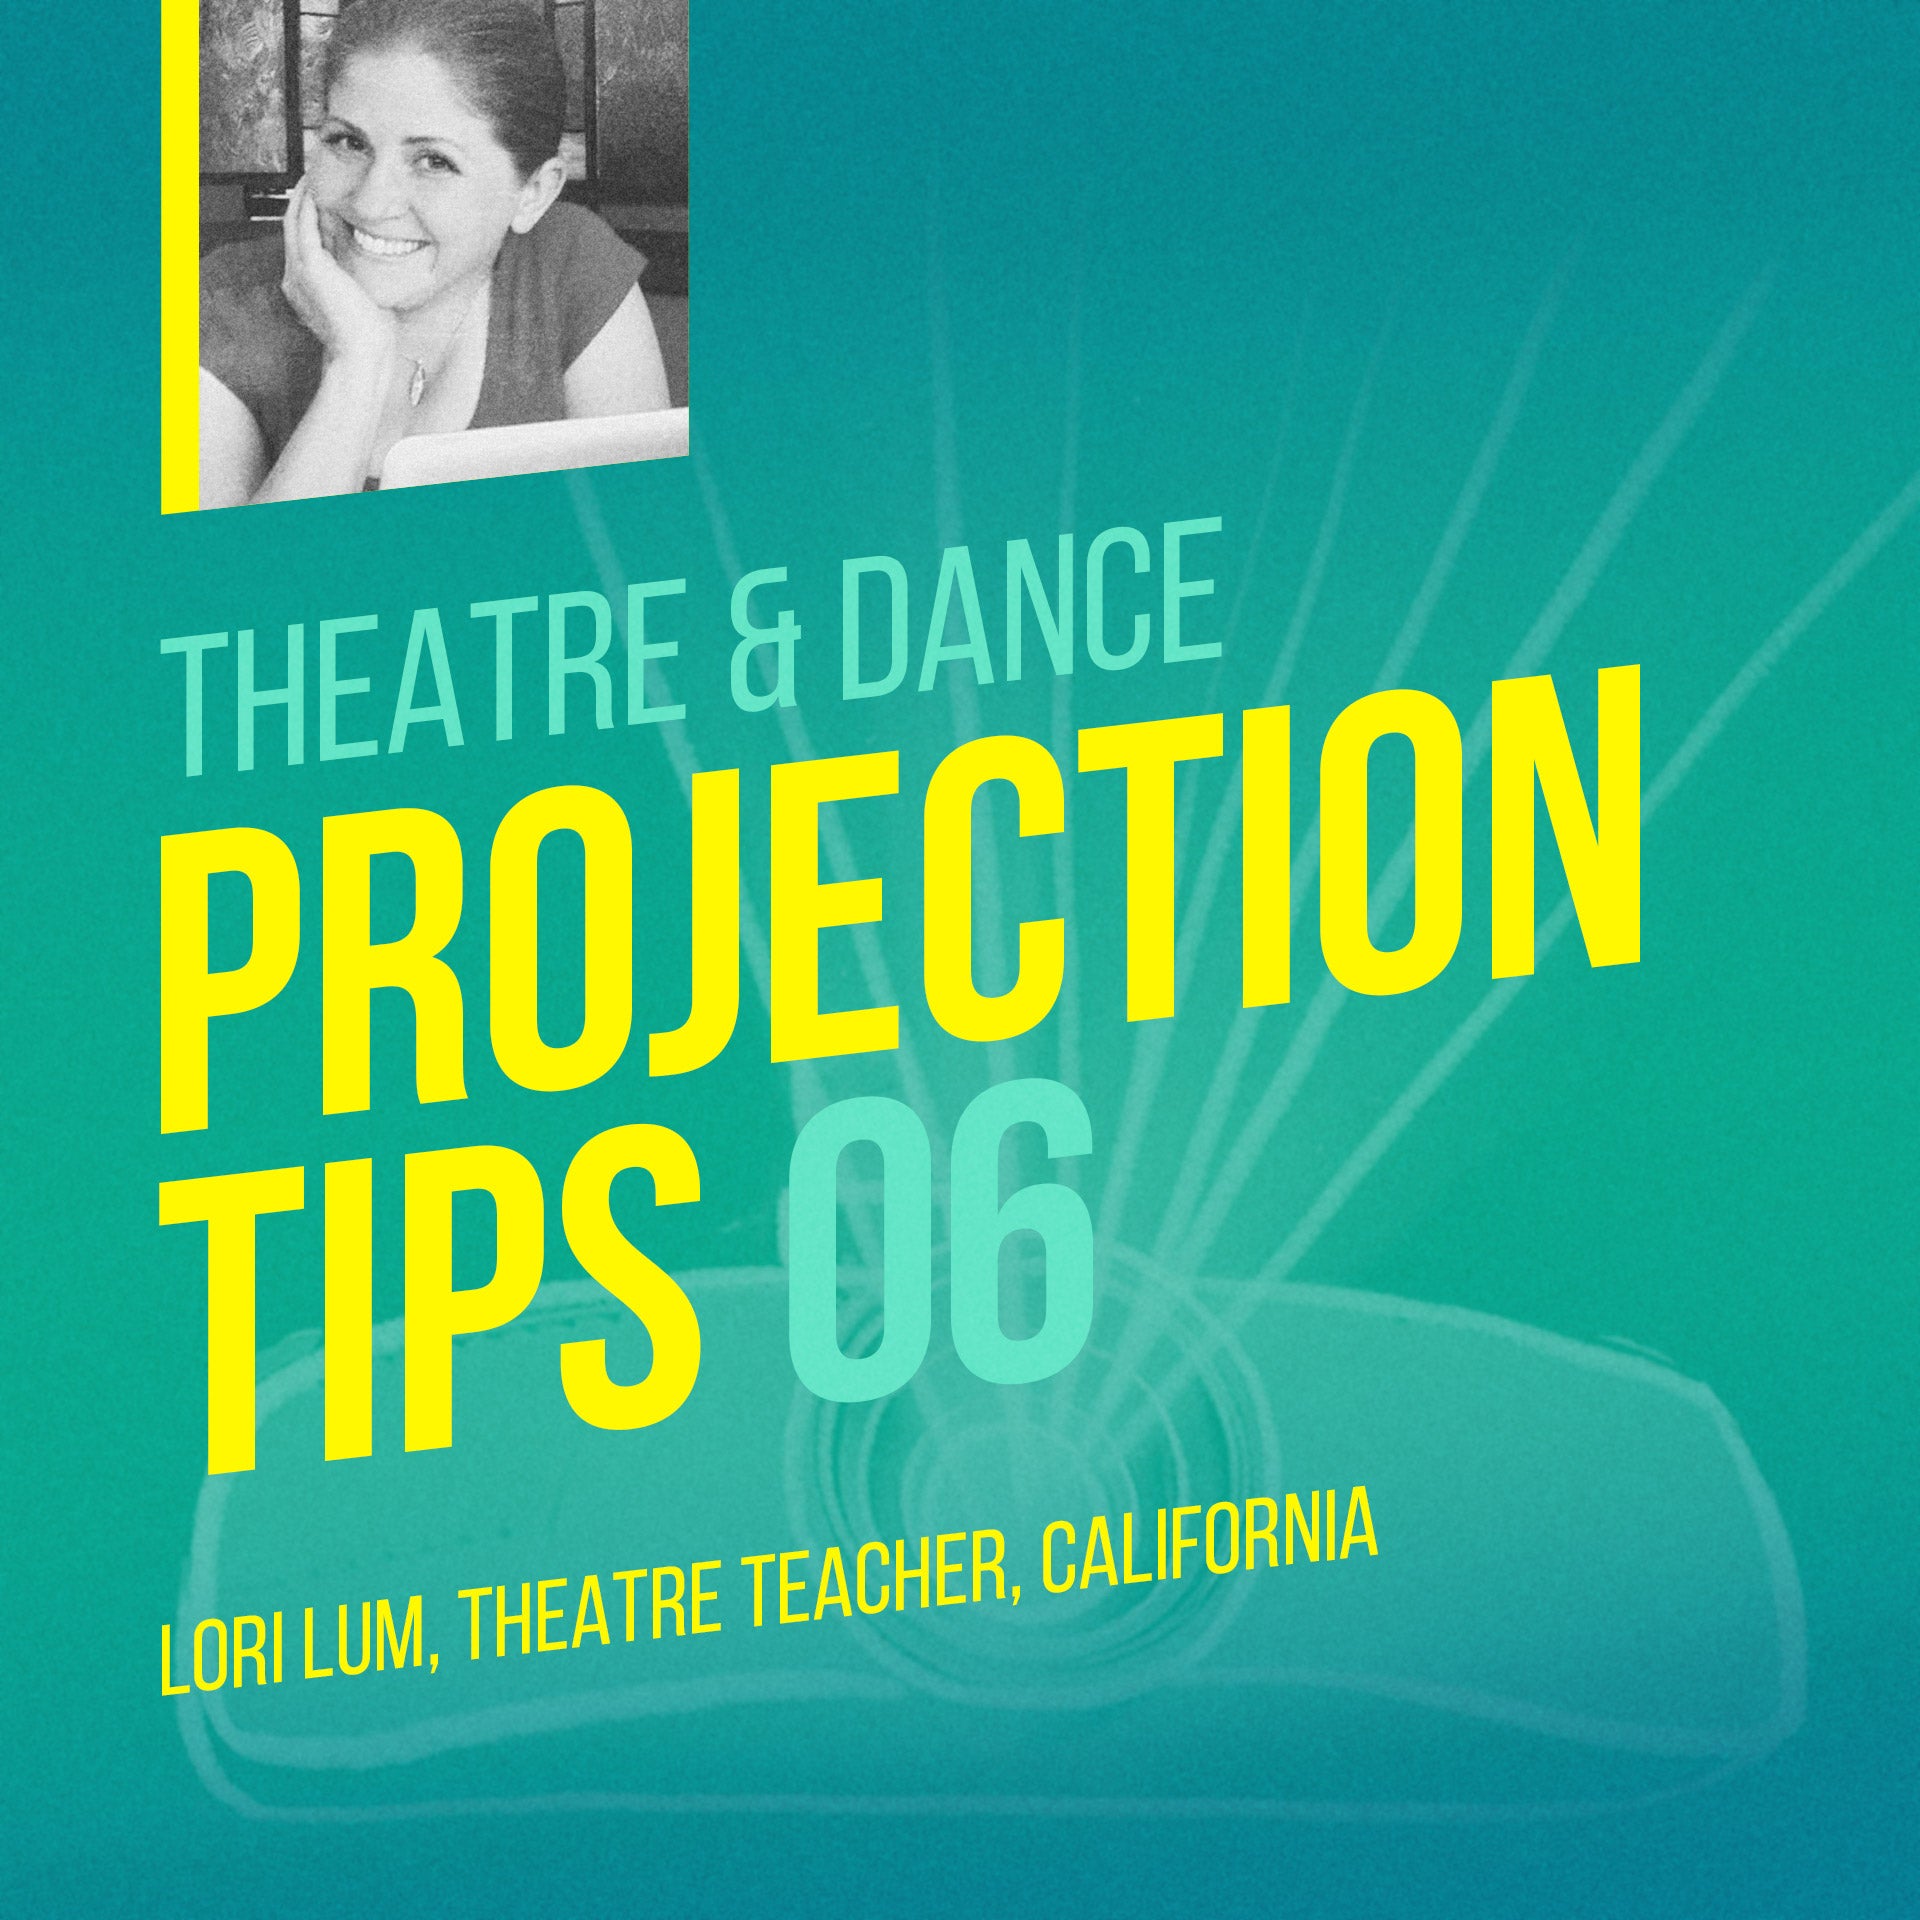 Scenic projection tip by Lori Lum, theater teacher in California.